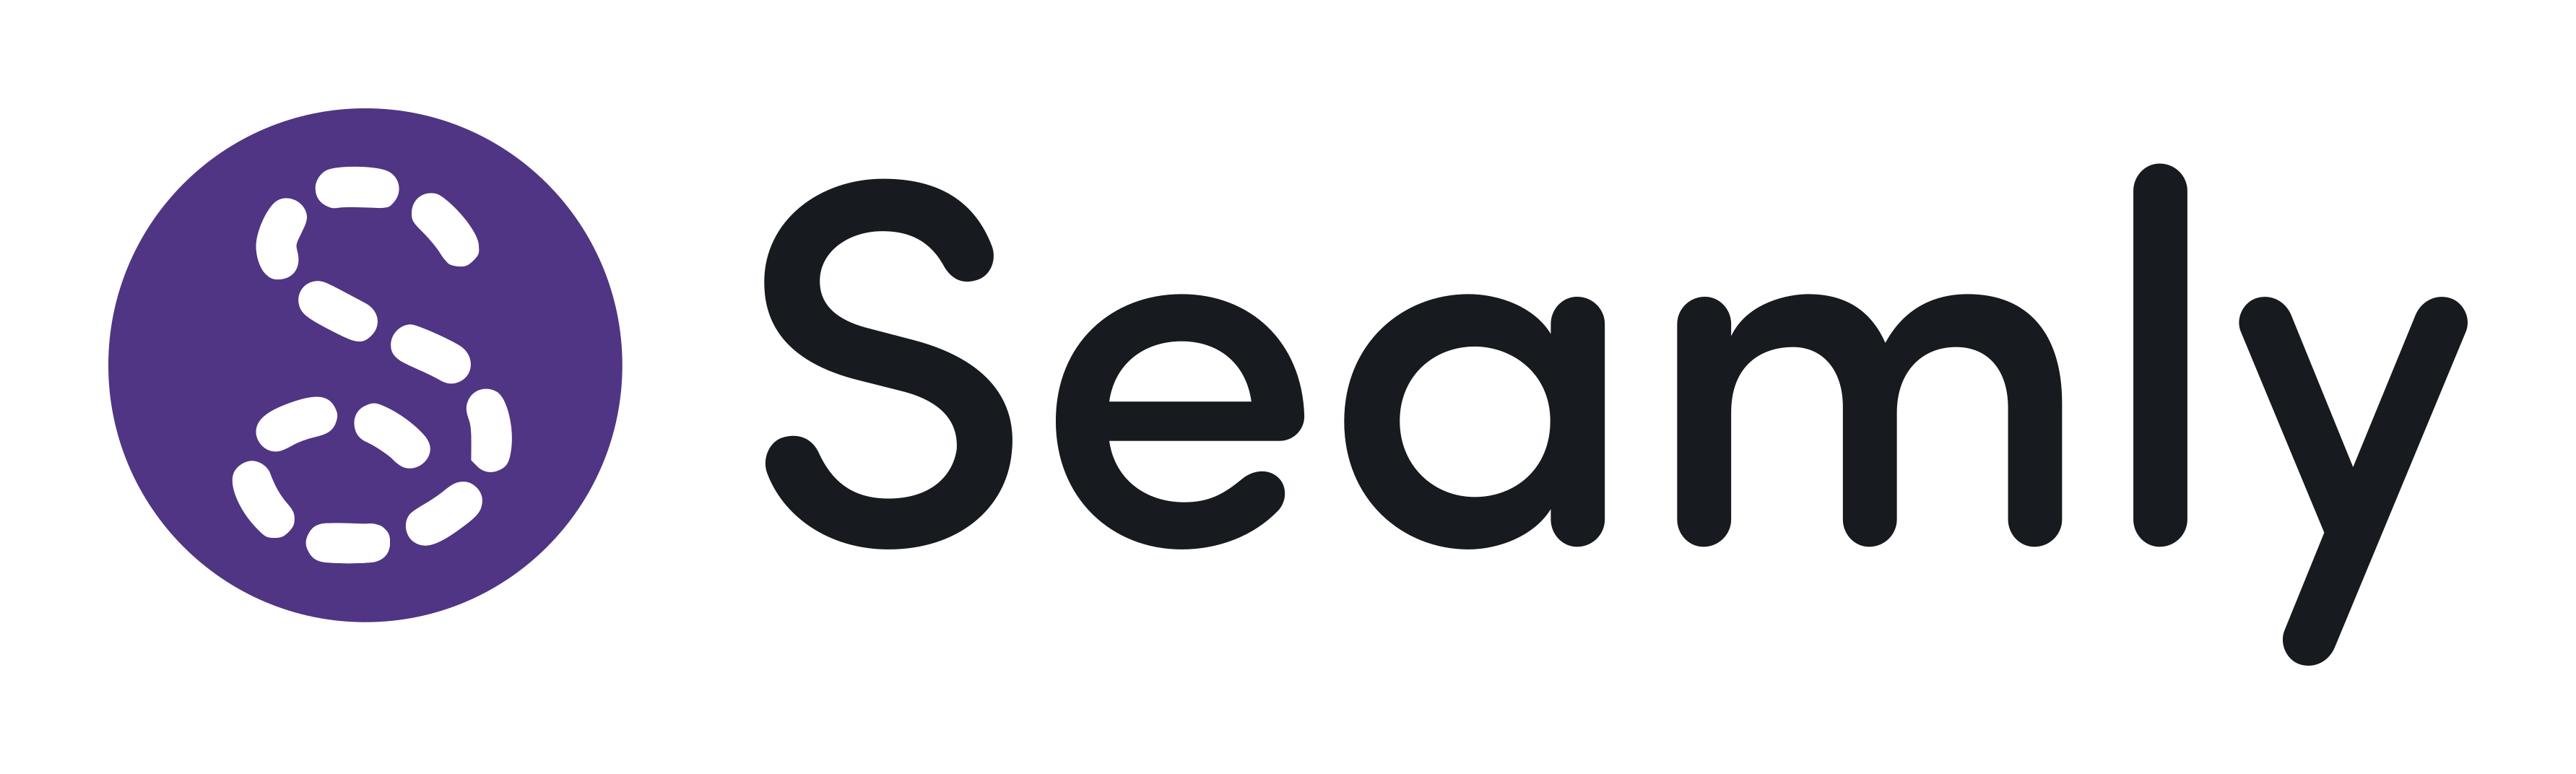 Seamly-Systems-Logo-Primary-white-background